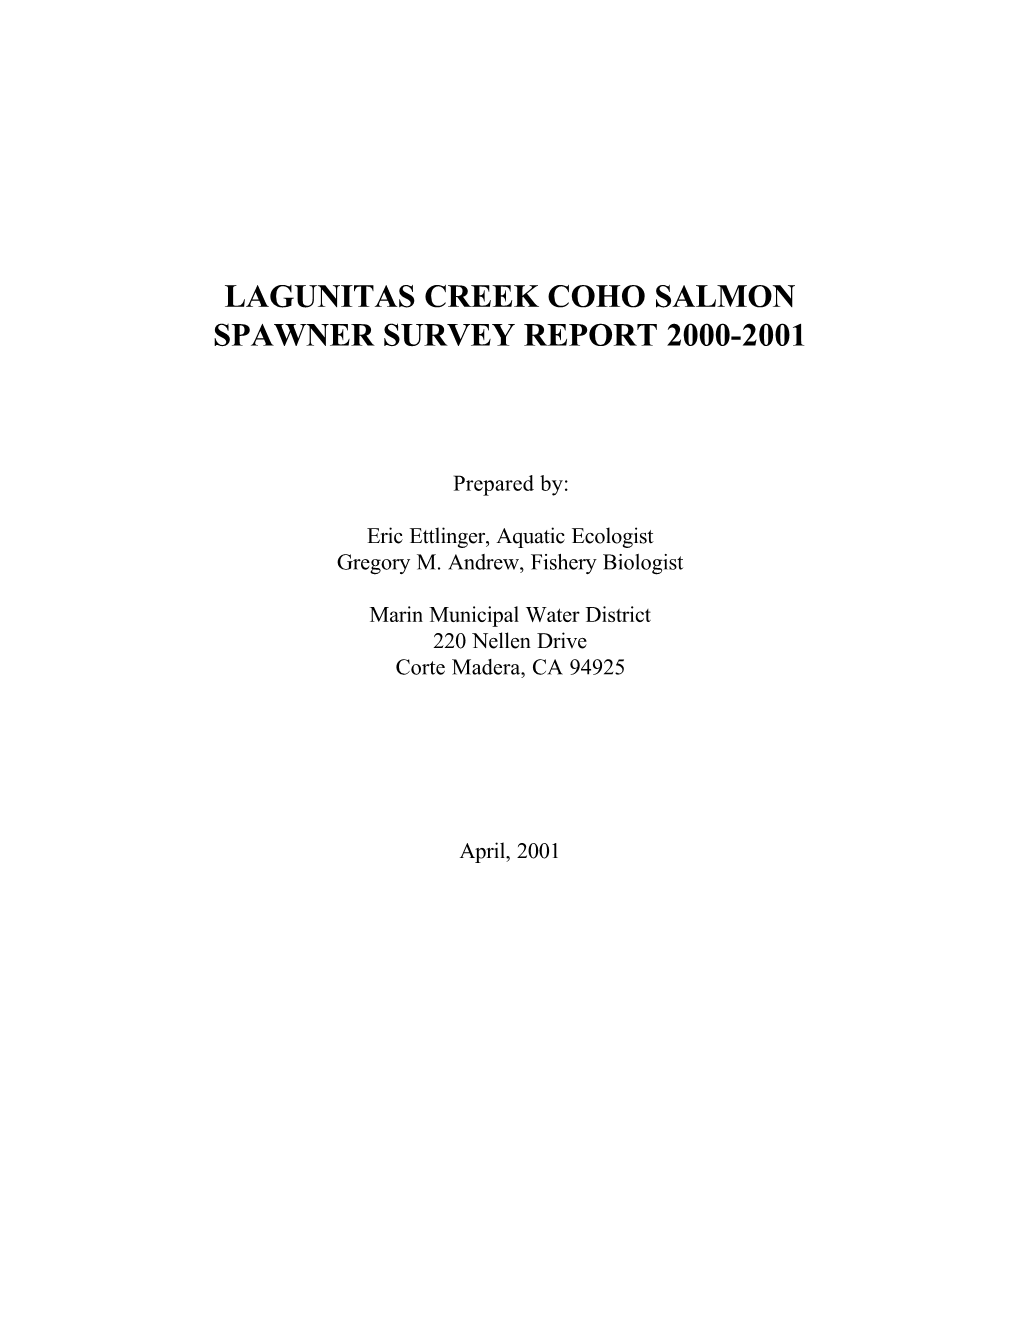 Lagunitas Creek Coho Salmon Spawner Survey Report 2000-2001